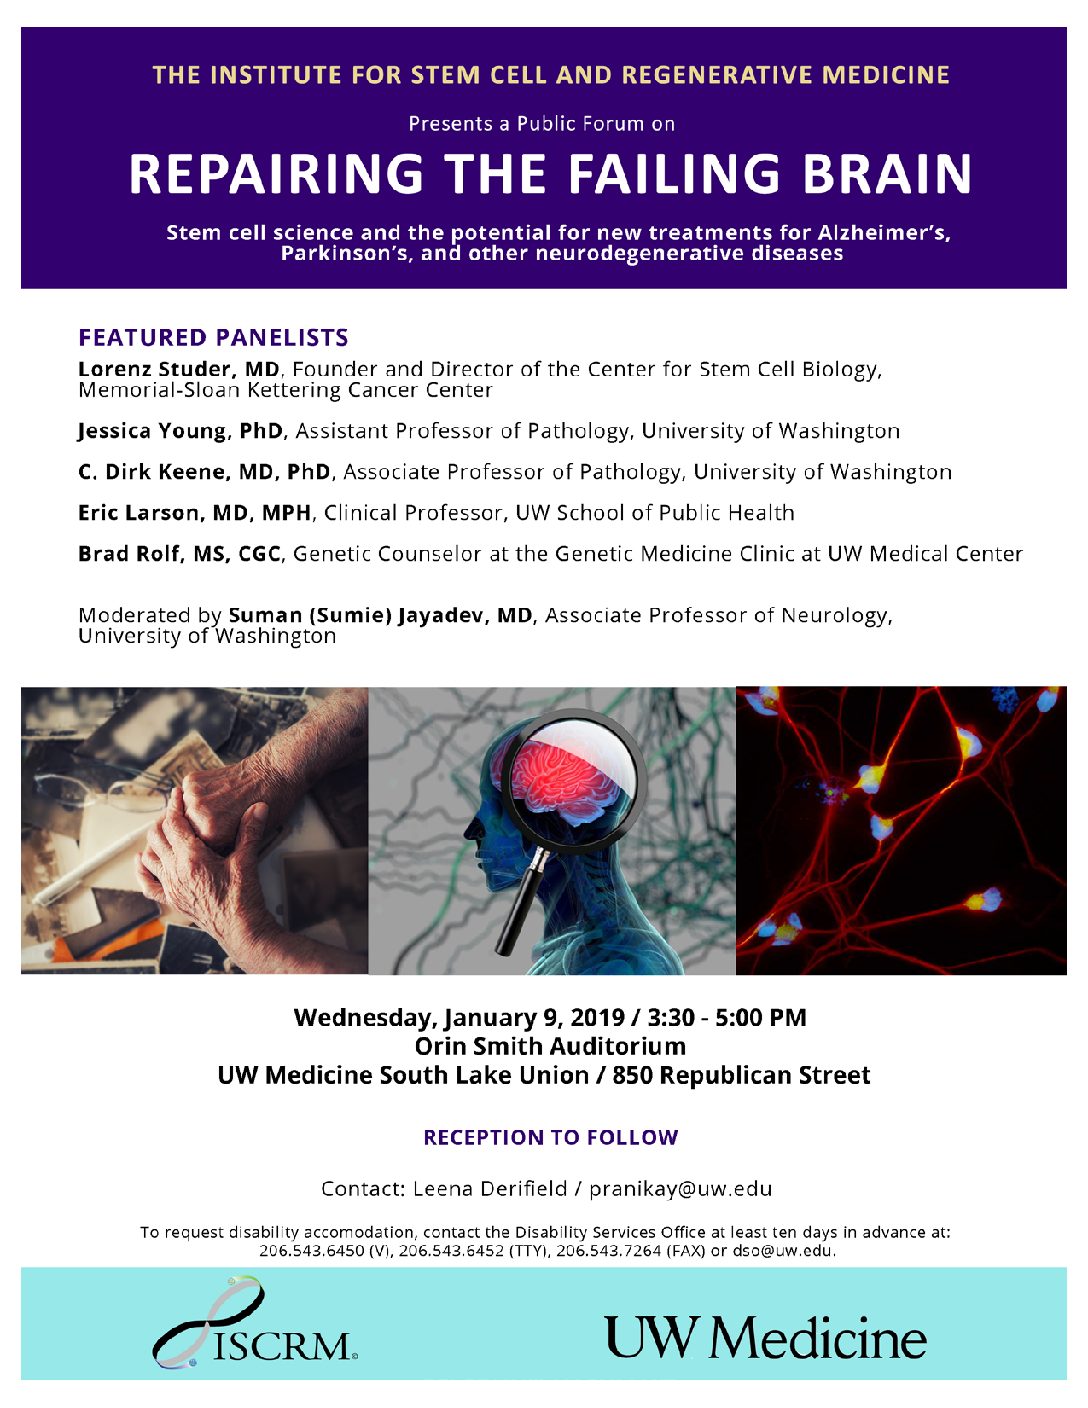 ISCRM repairing the failing brain Jan 9, 2019